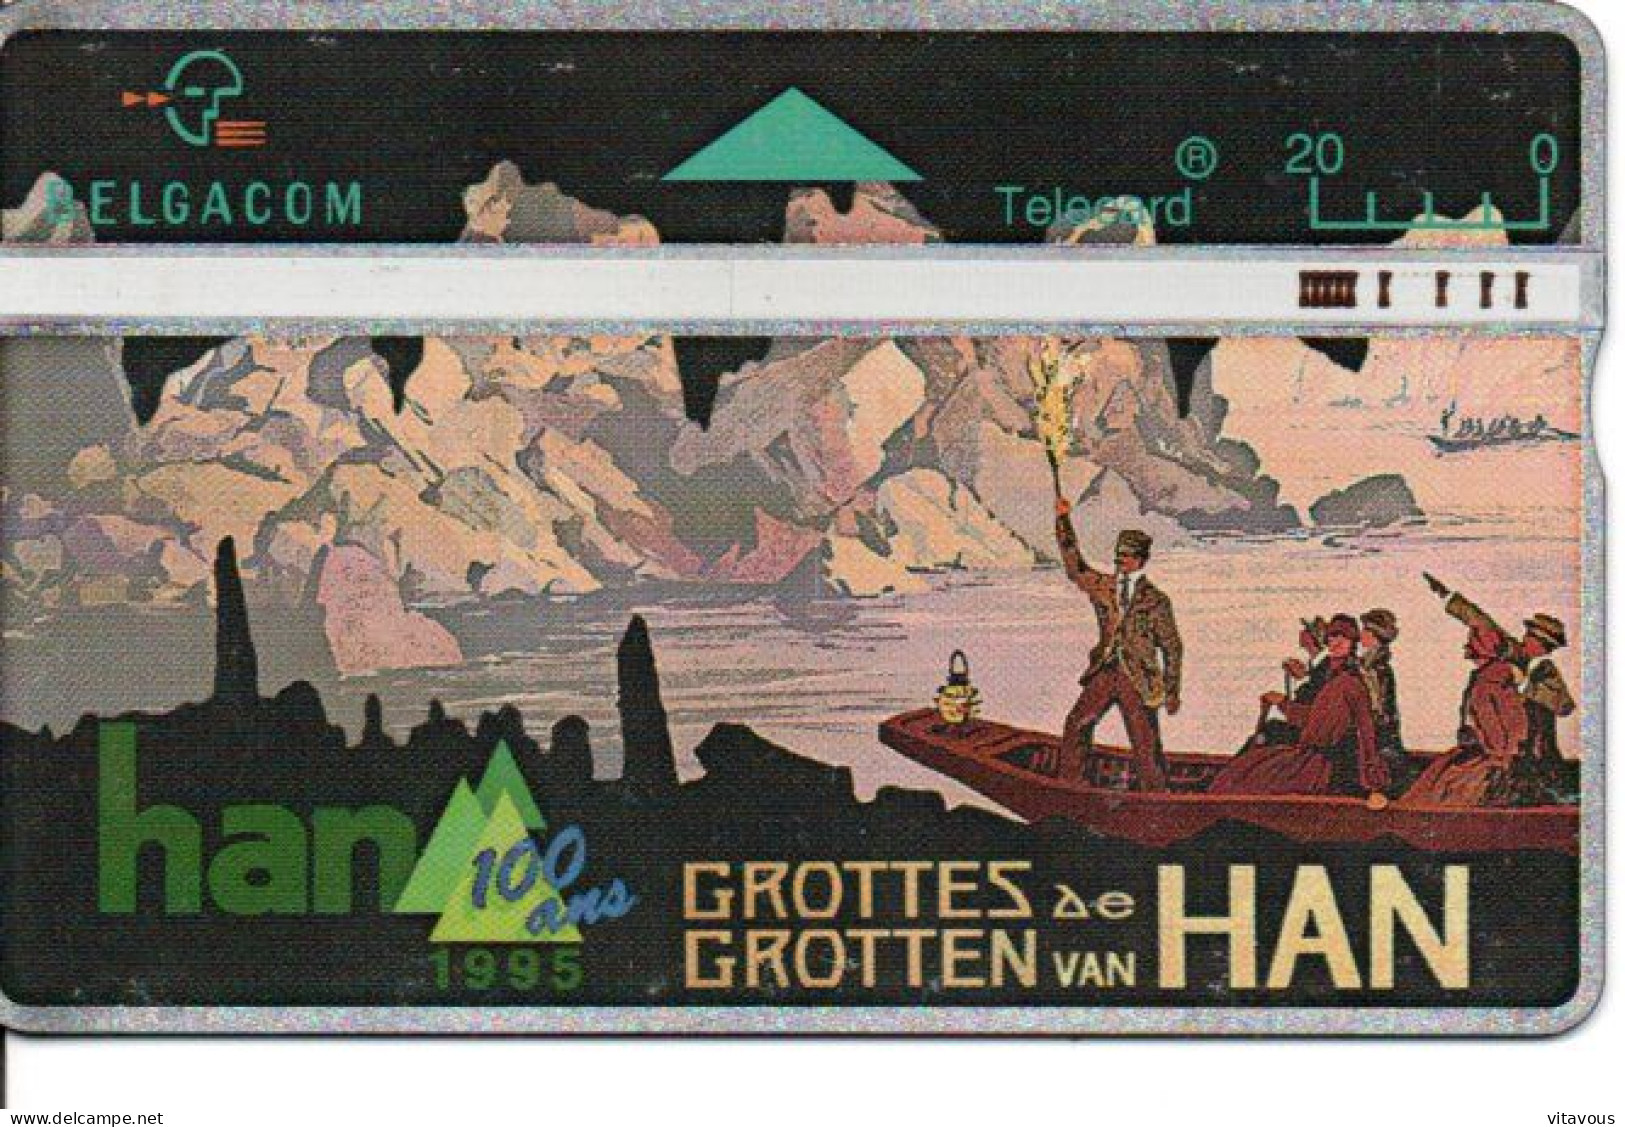 Grotte Van HAN Télécarte Belgique Phonecard (B 773) - Senza Chip